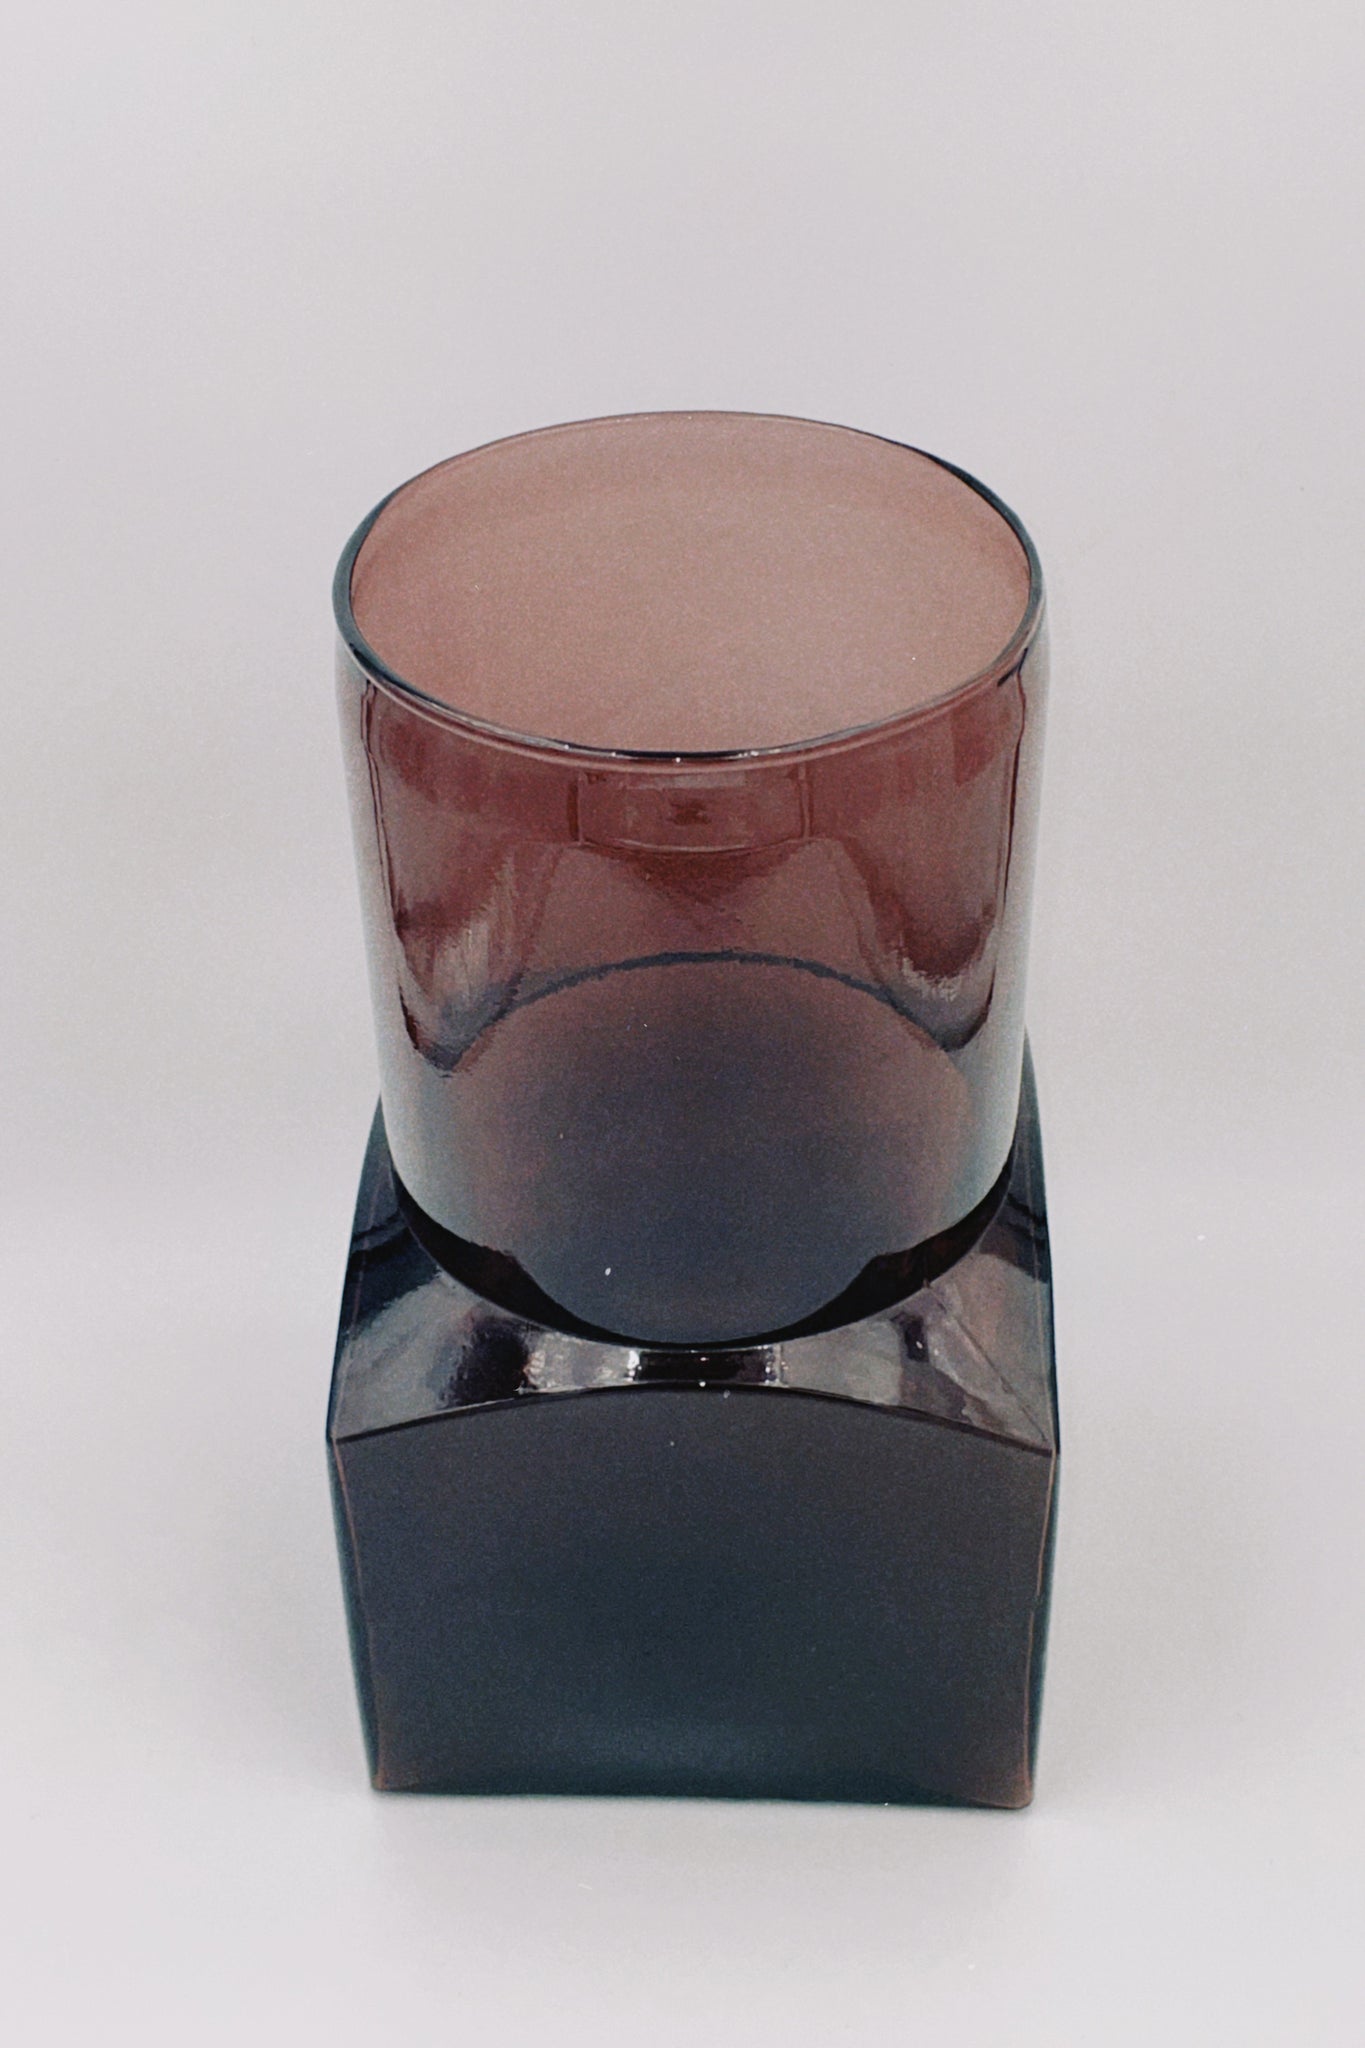 Plum Glass Vase